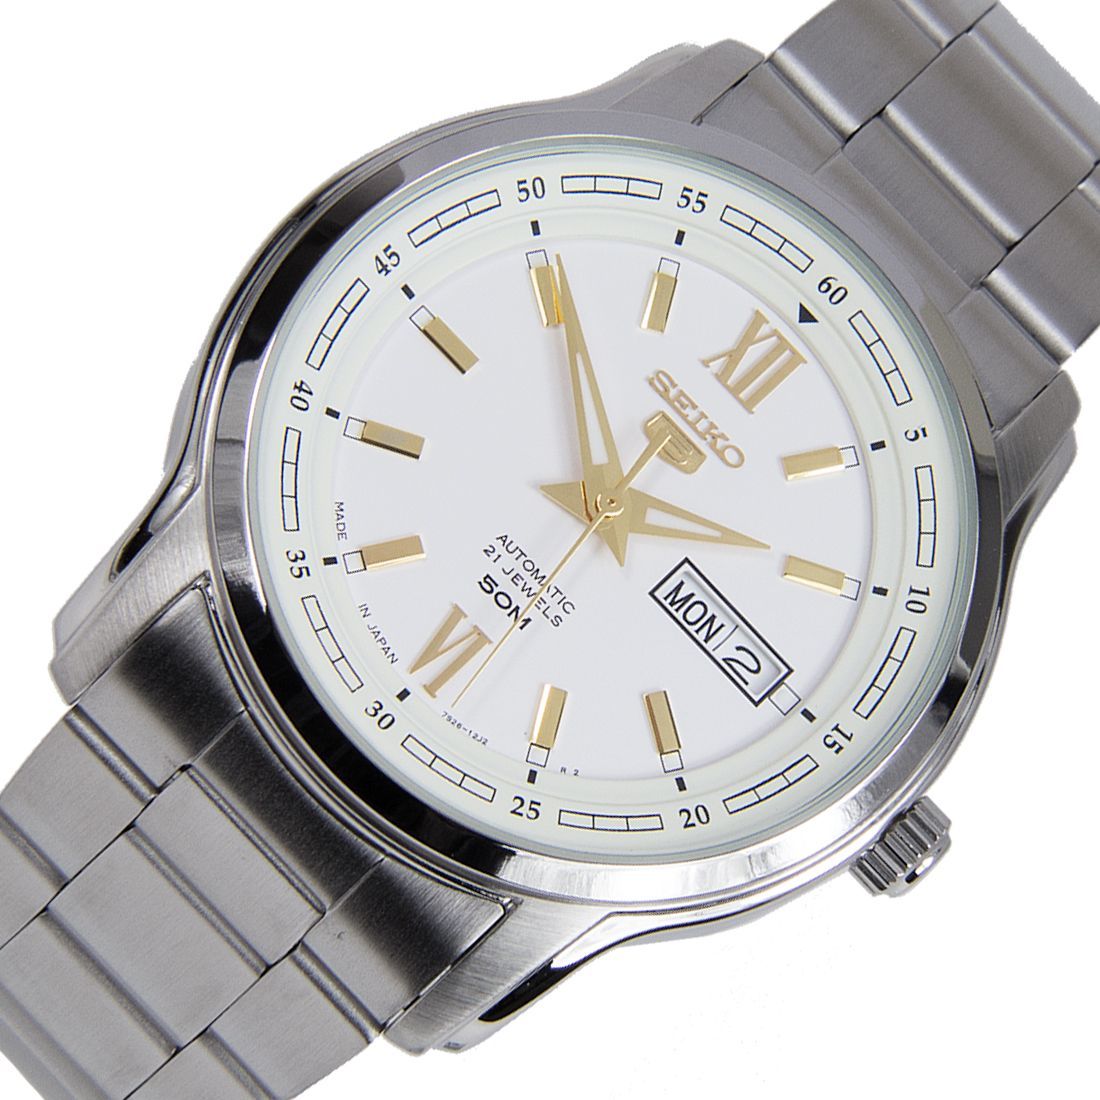 Seiko Made in Japan Automatic Watch SNKP15 SNKP15J1 SNKP15J -Seiko